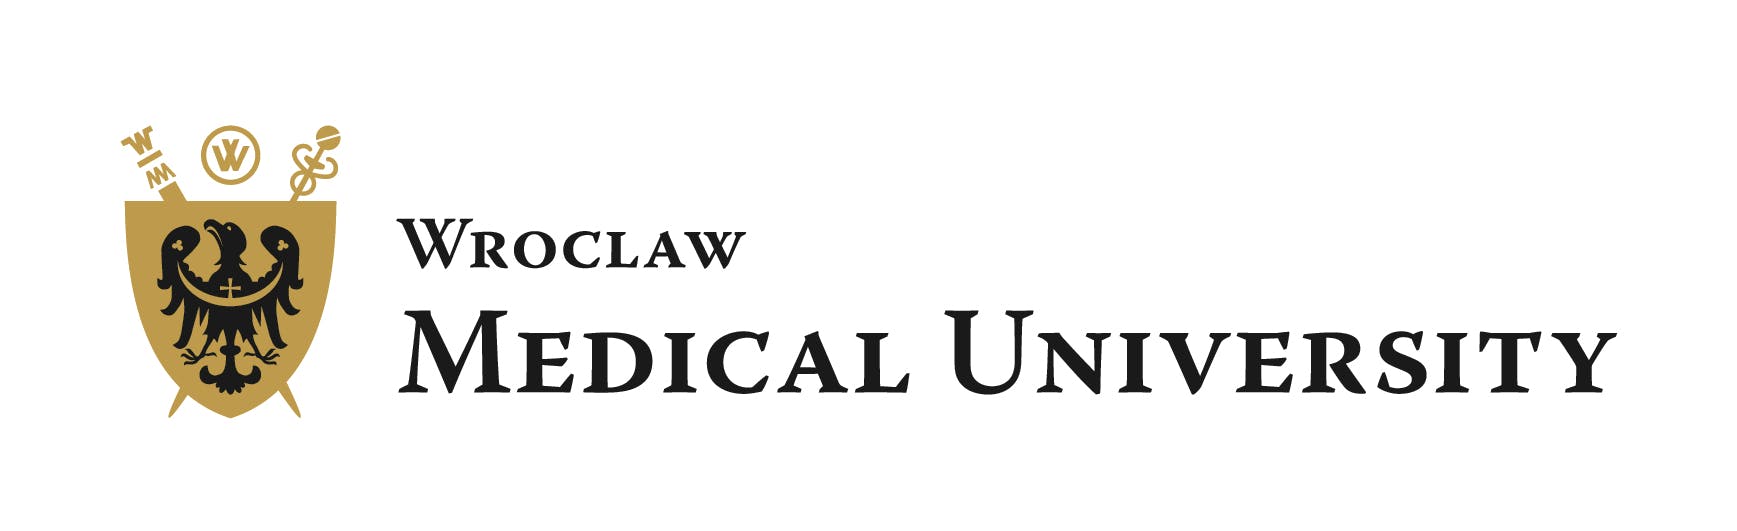 wroclaw-medical-university